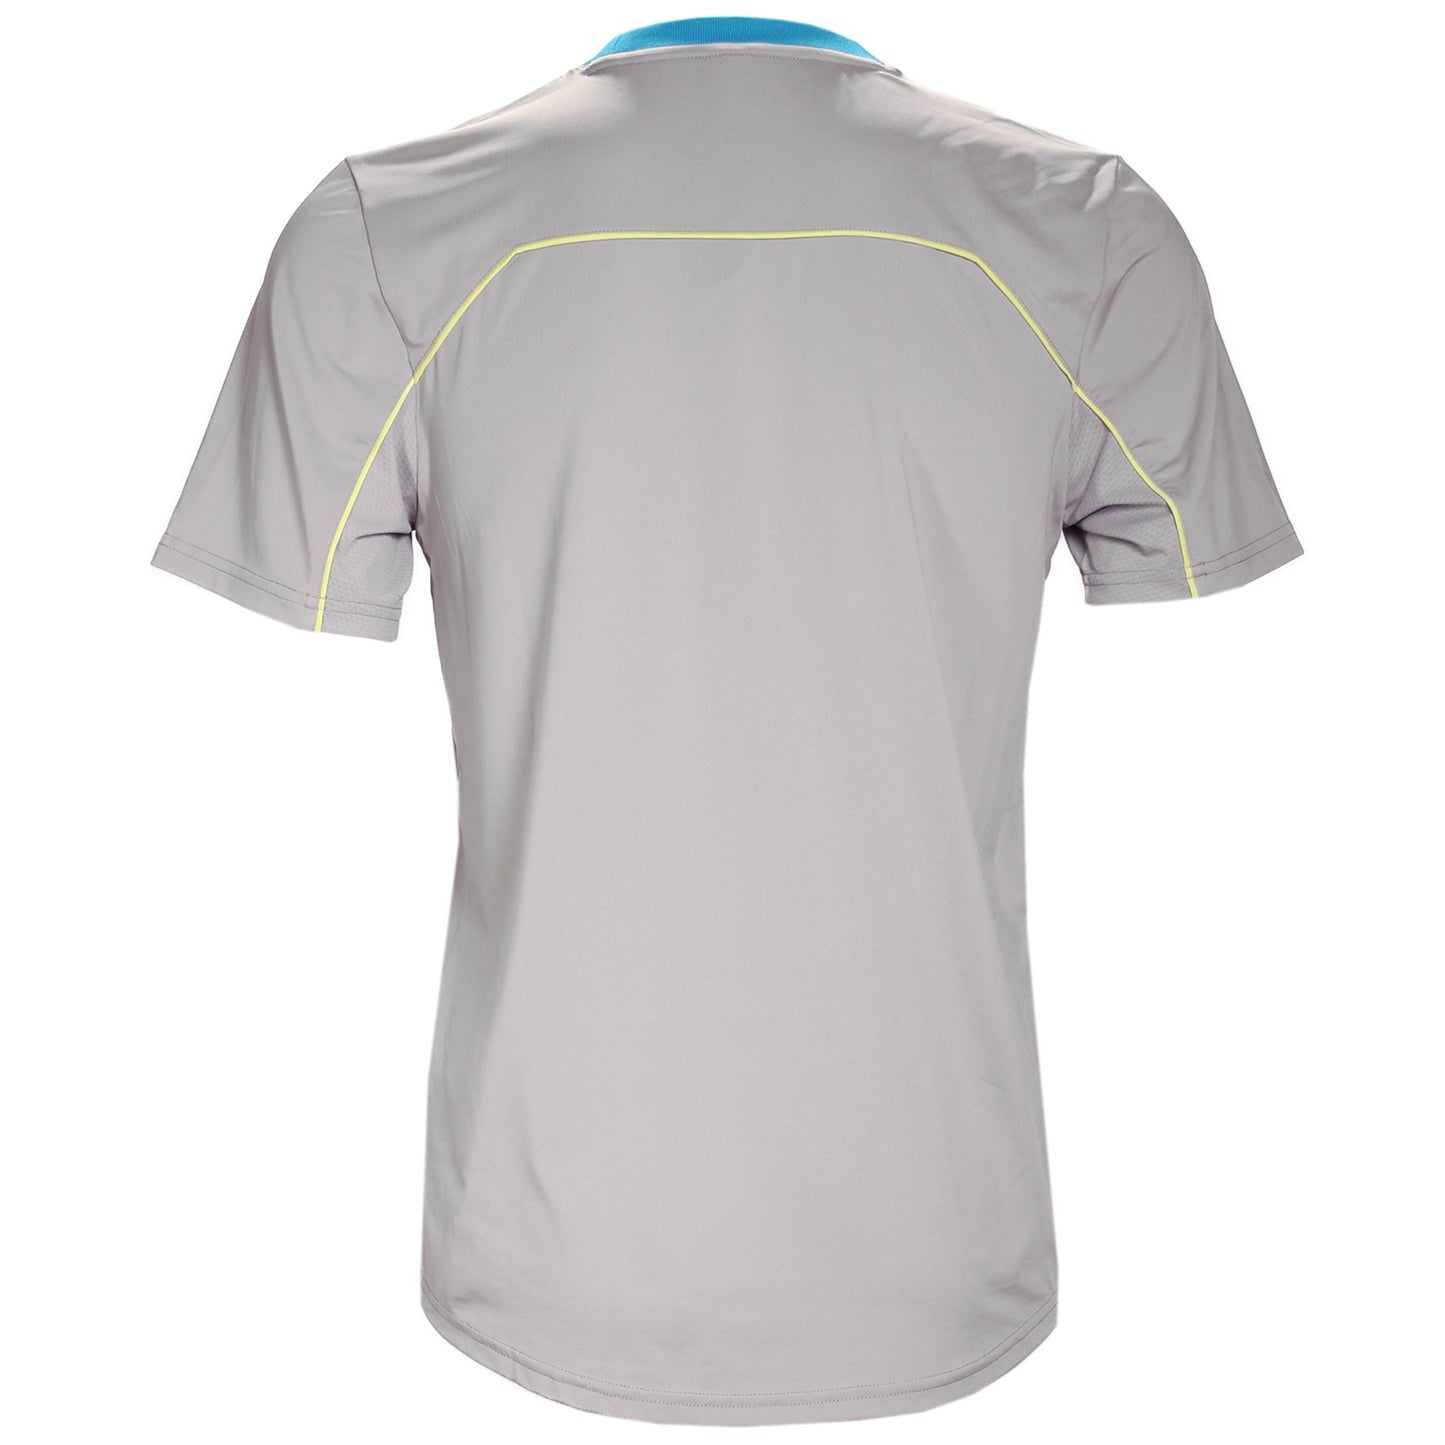 Fila Men's Backspin Short Sleeve Top TM33D707-092